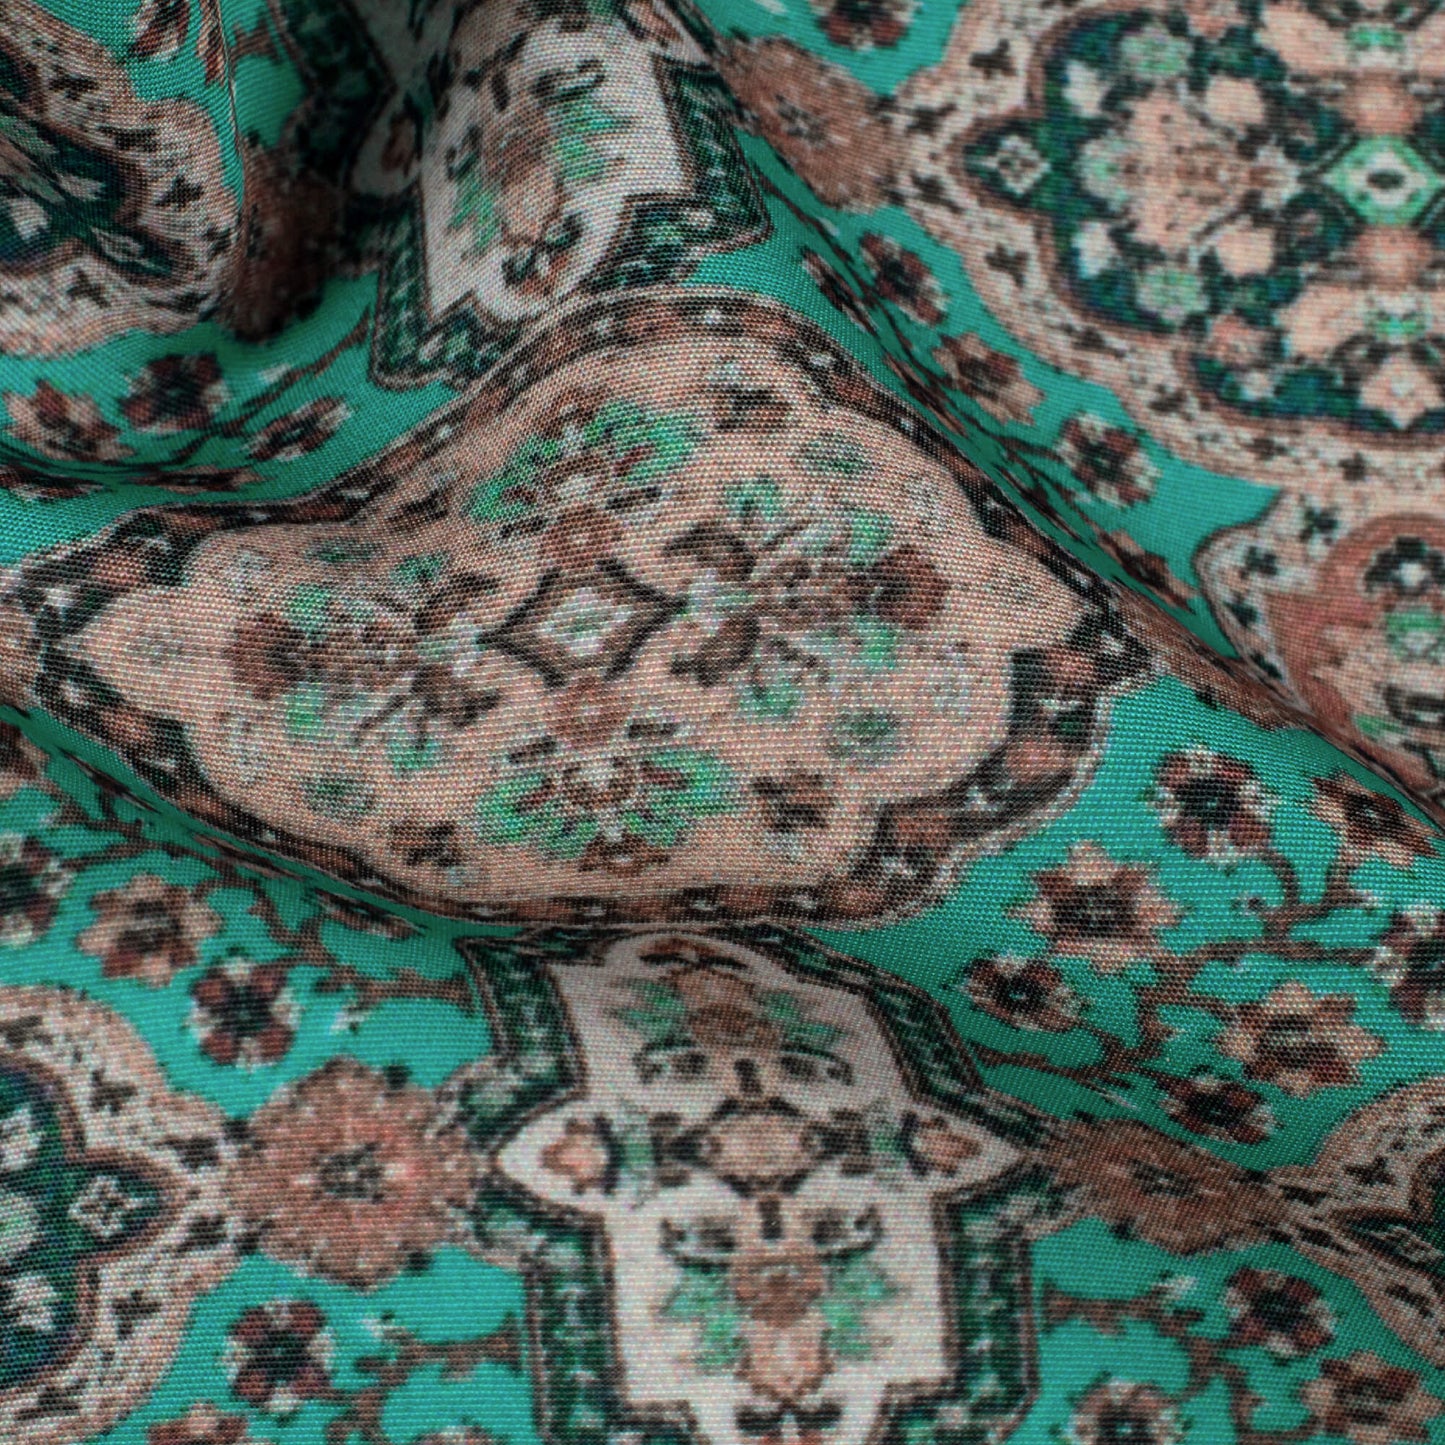 Aqua Blue And Peach Traditional Pattern Digital Print Royal BSY Crepe Fabric